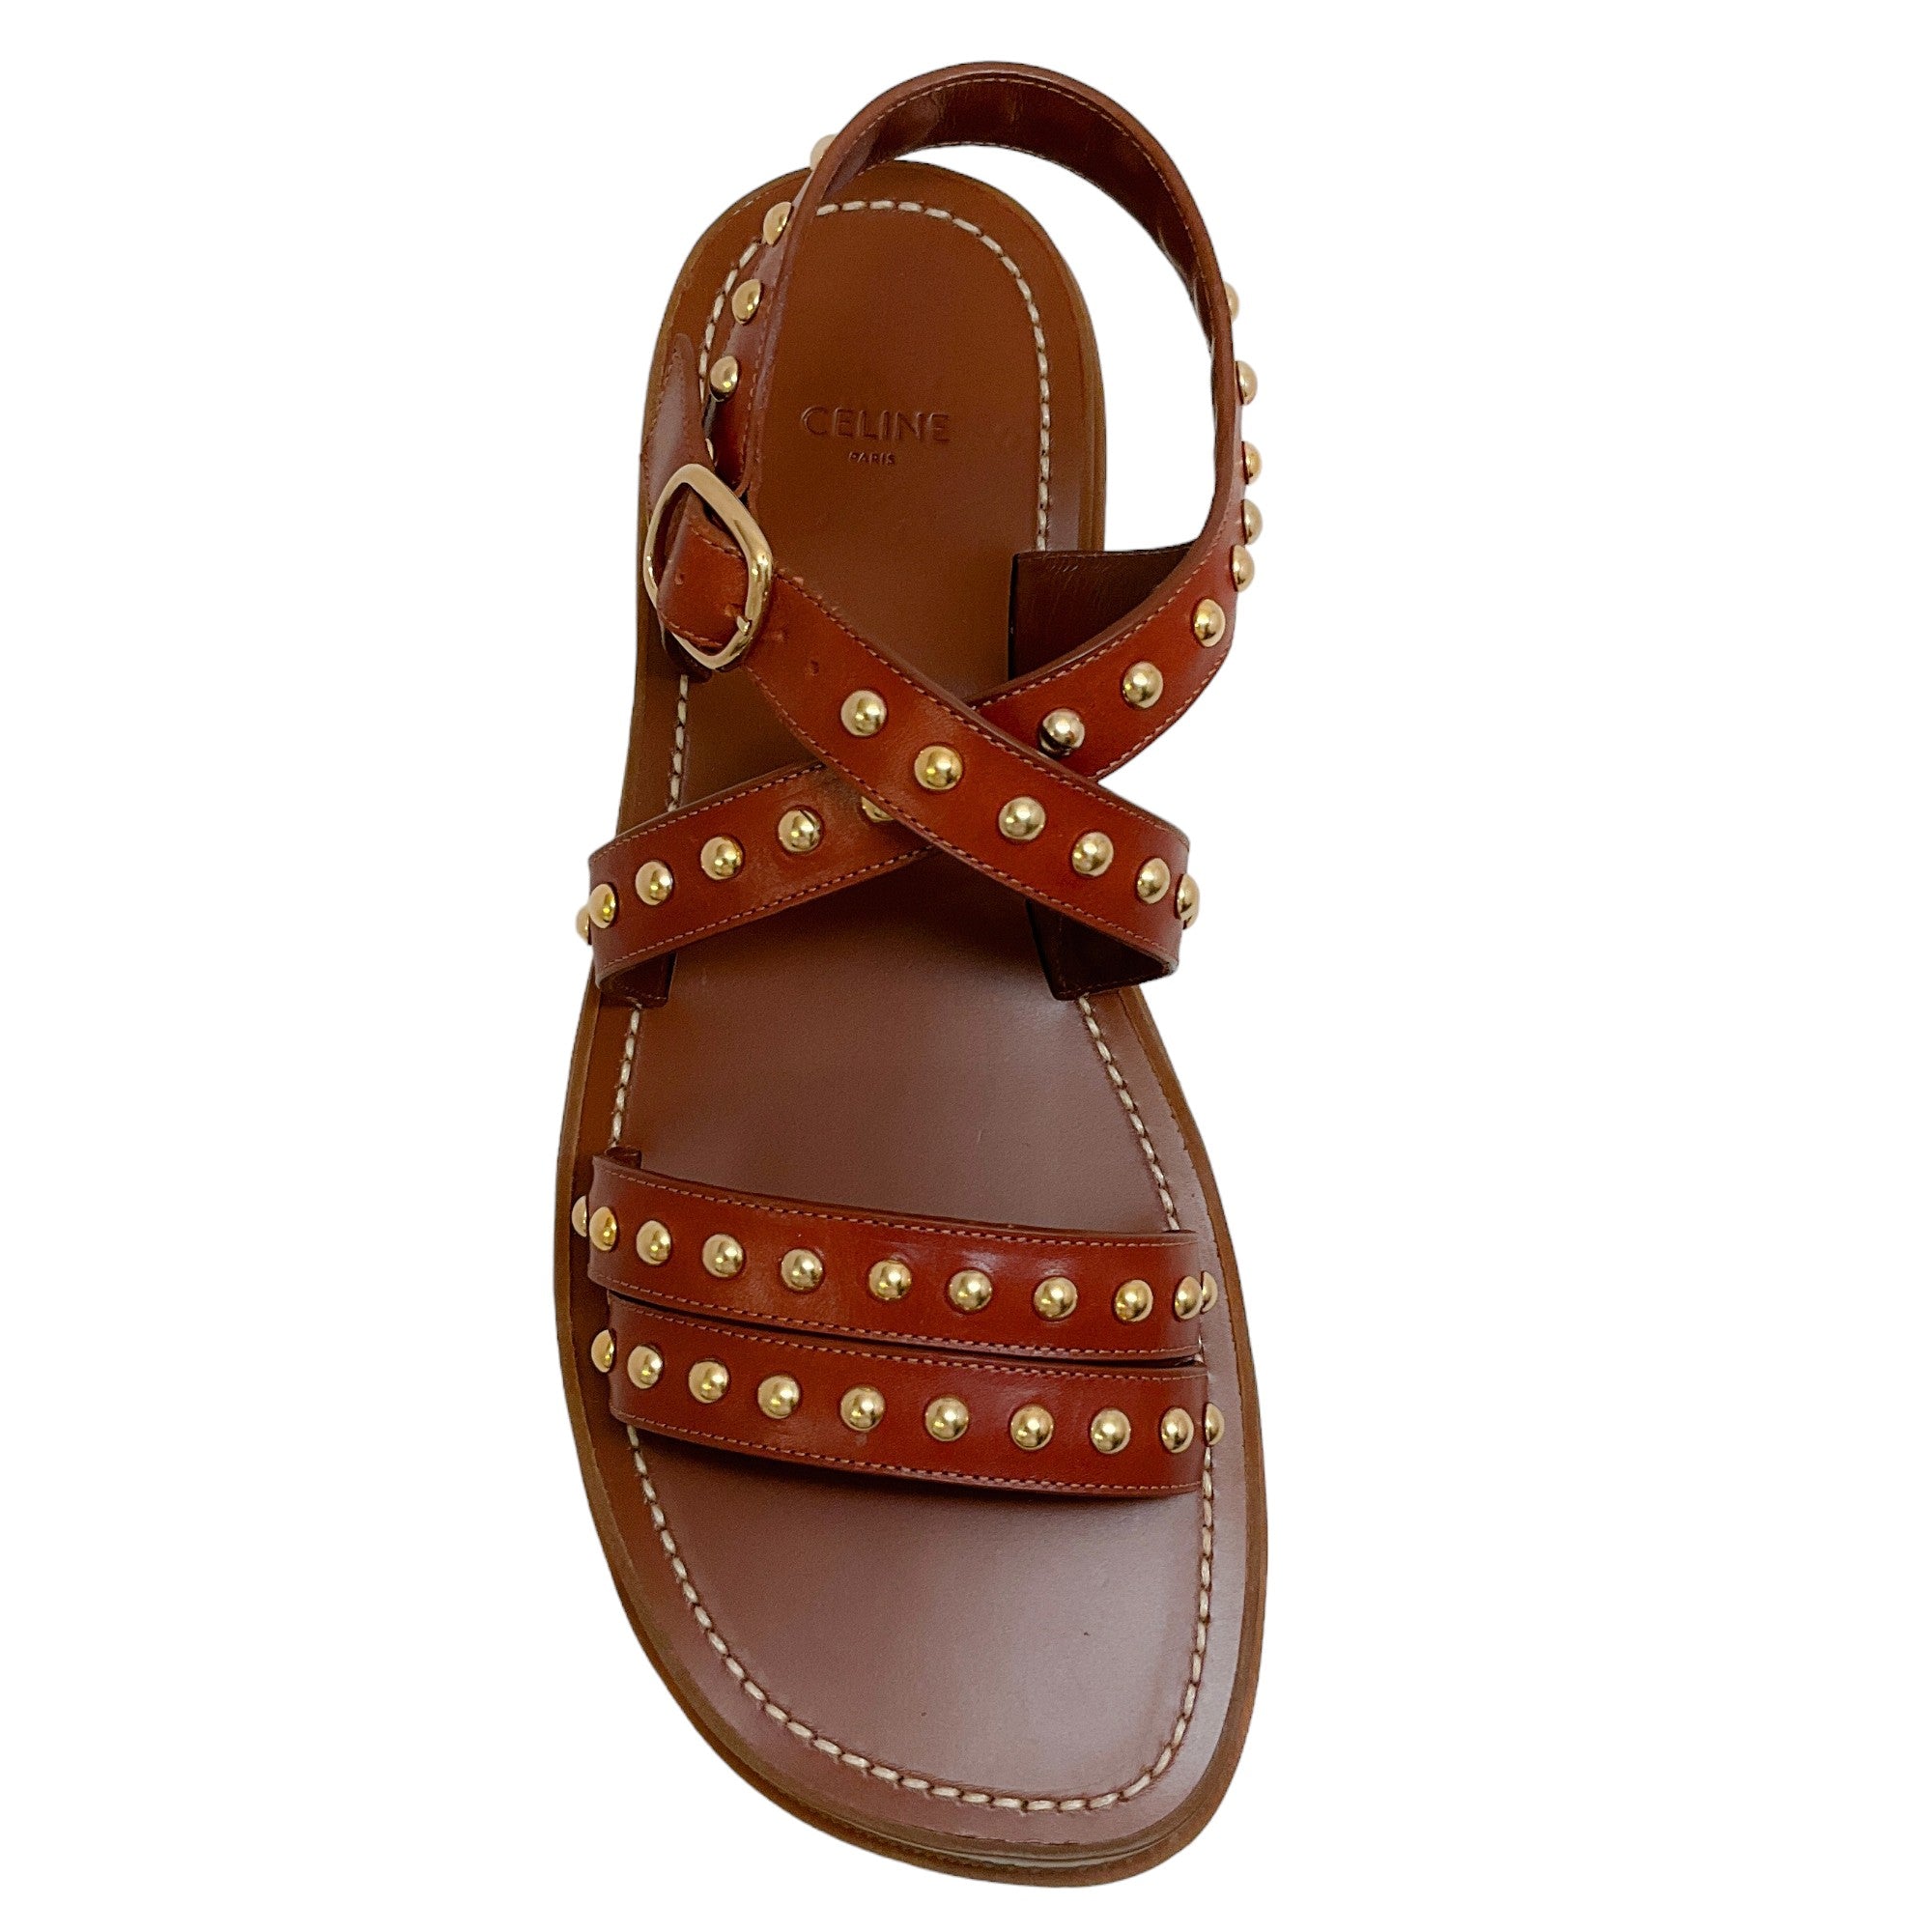 Celine Cognac Leather Chunky Studded Sandals